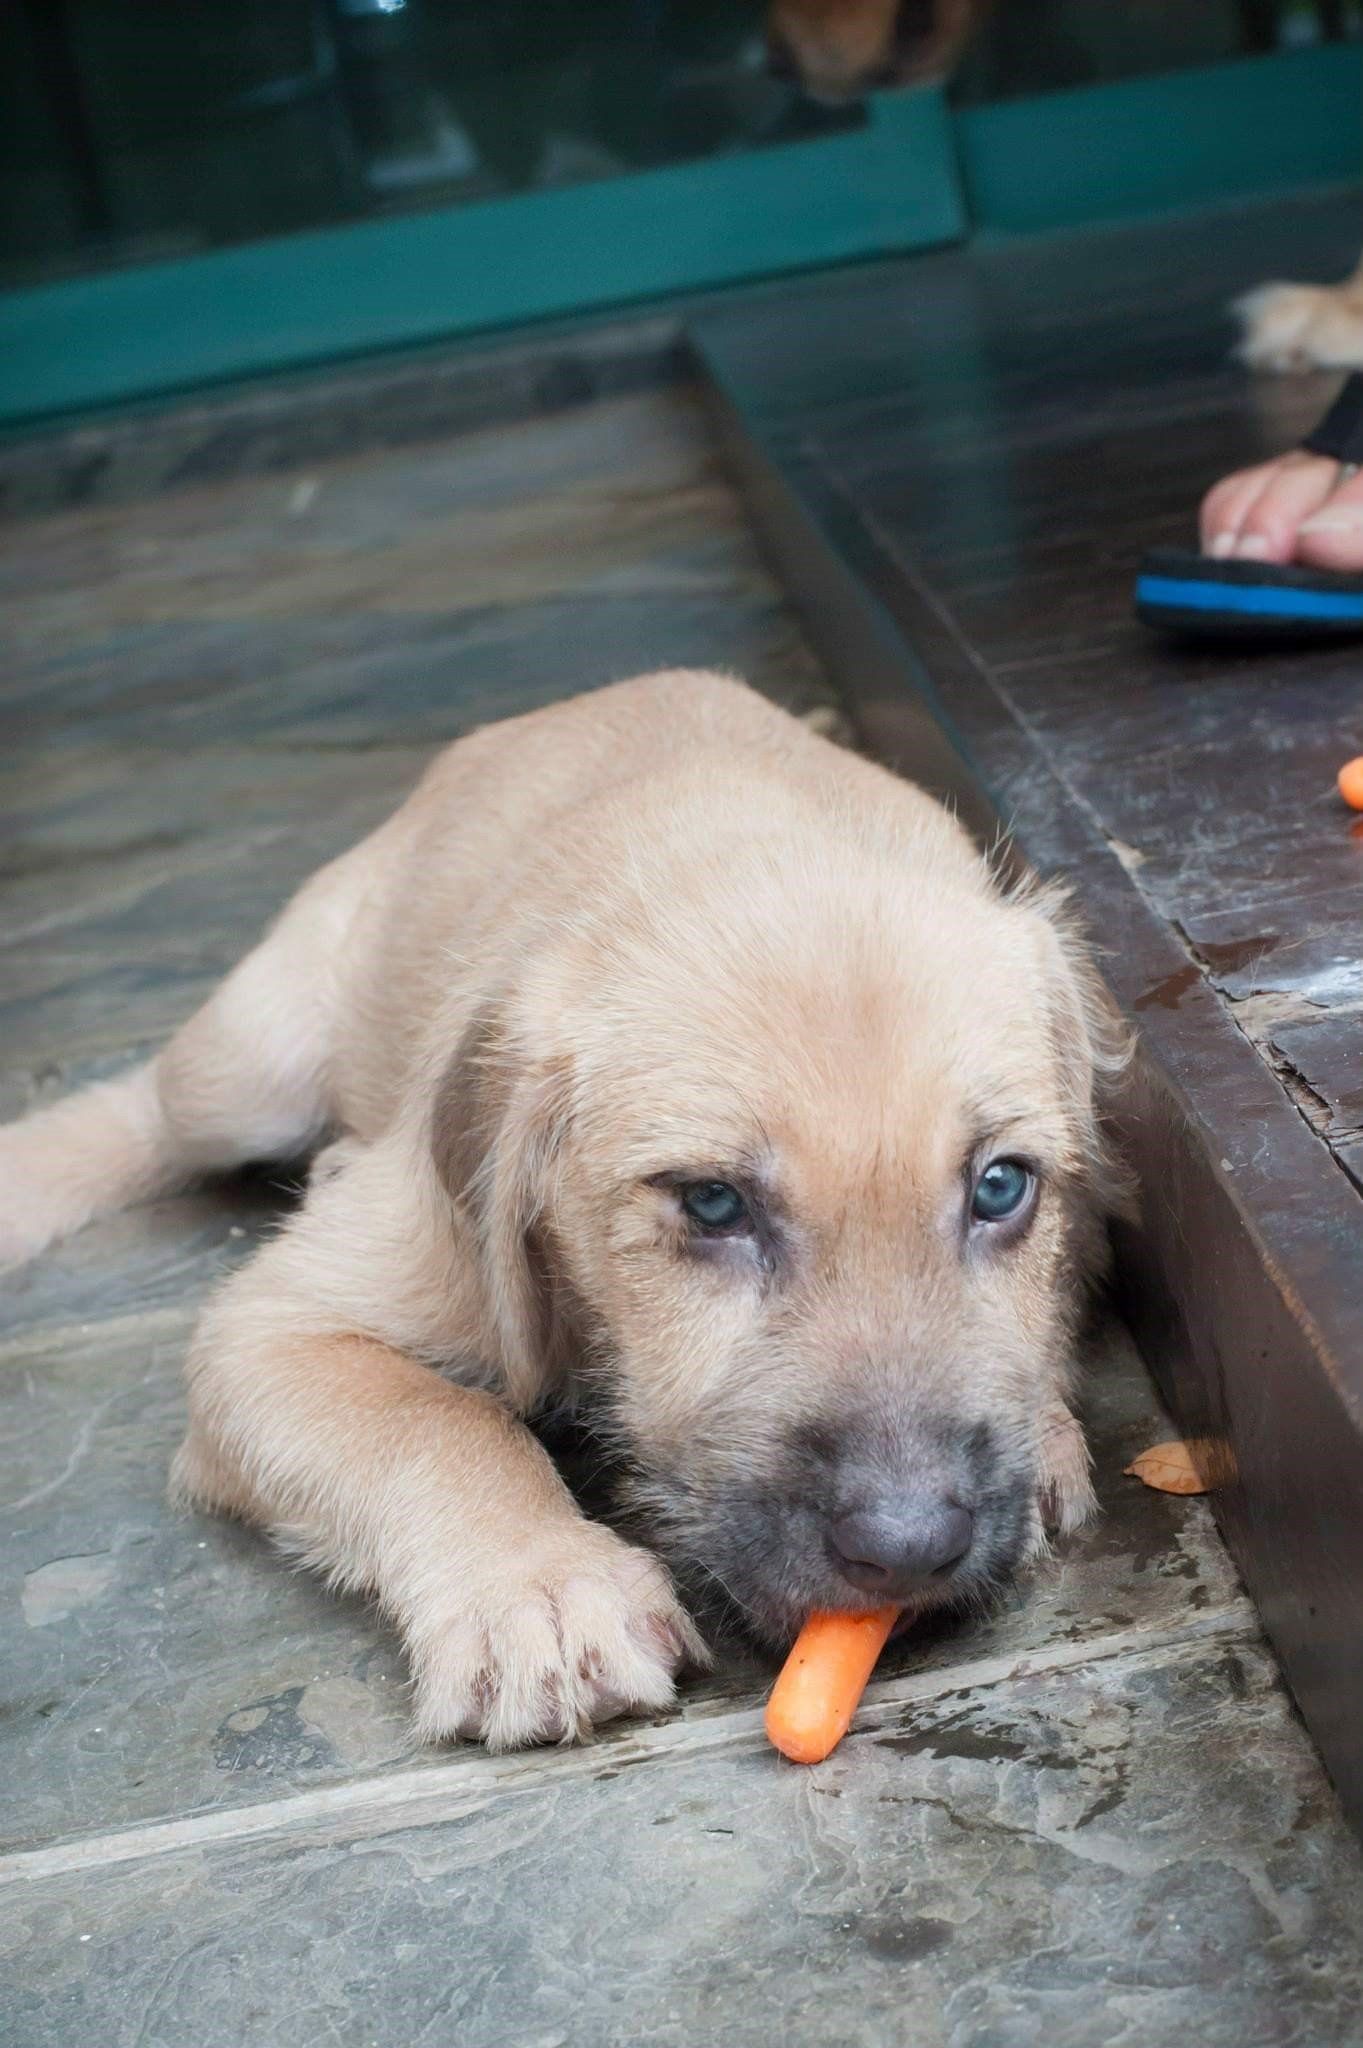 Nala eating a baby carrot